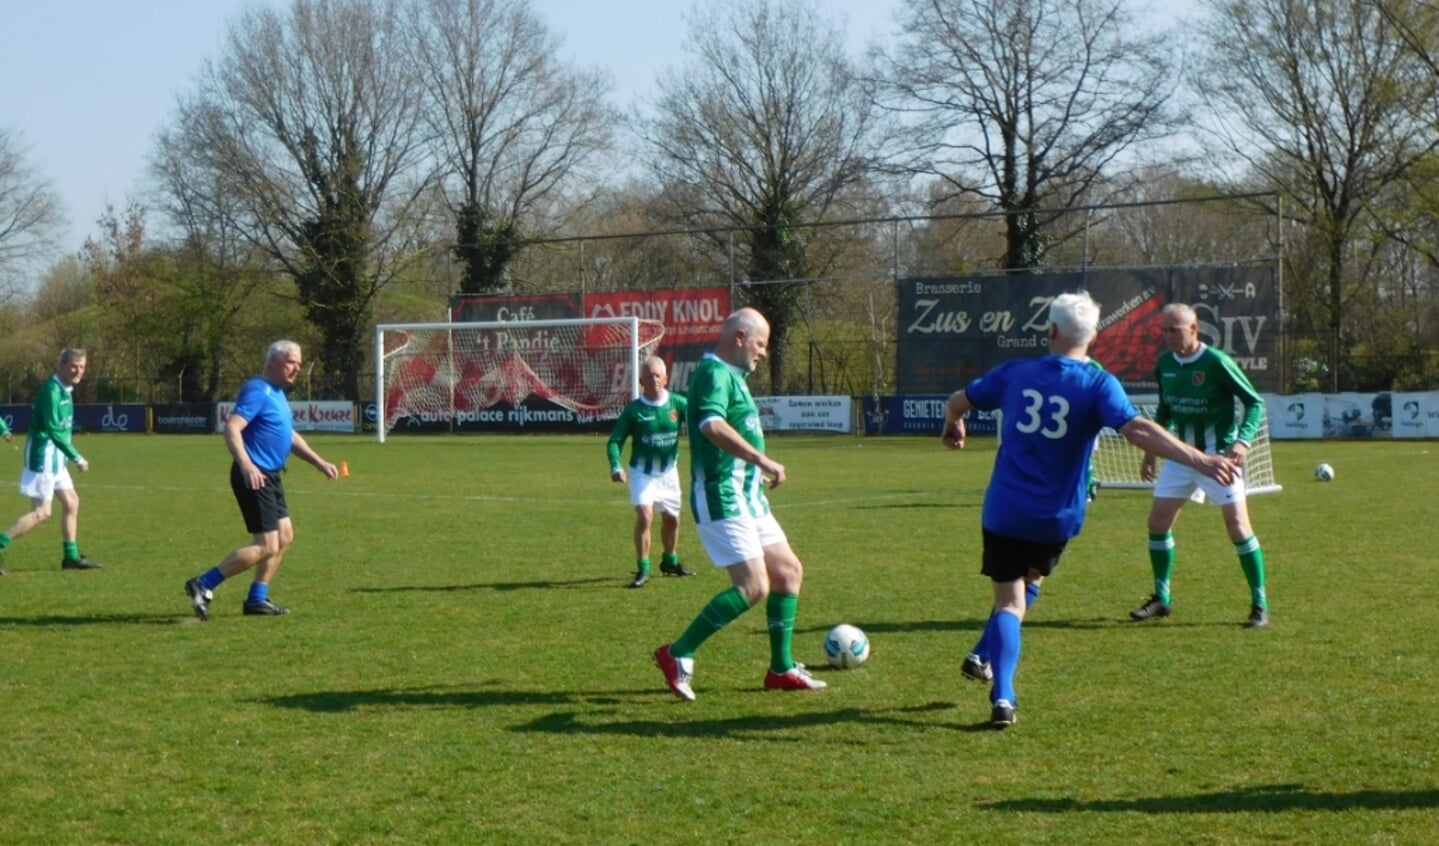 Vv Steenwijk (blauwe shirts) tegen FC Meppel